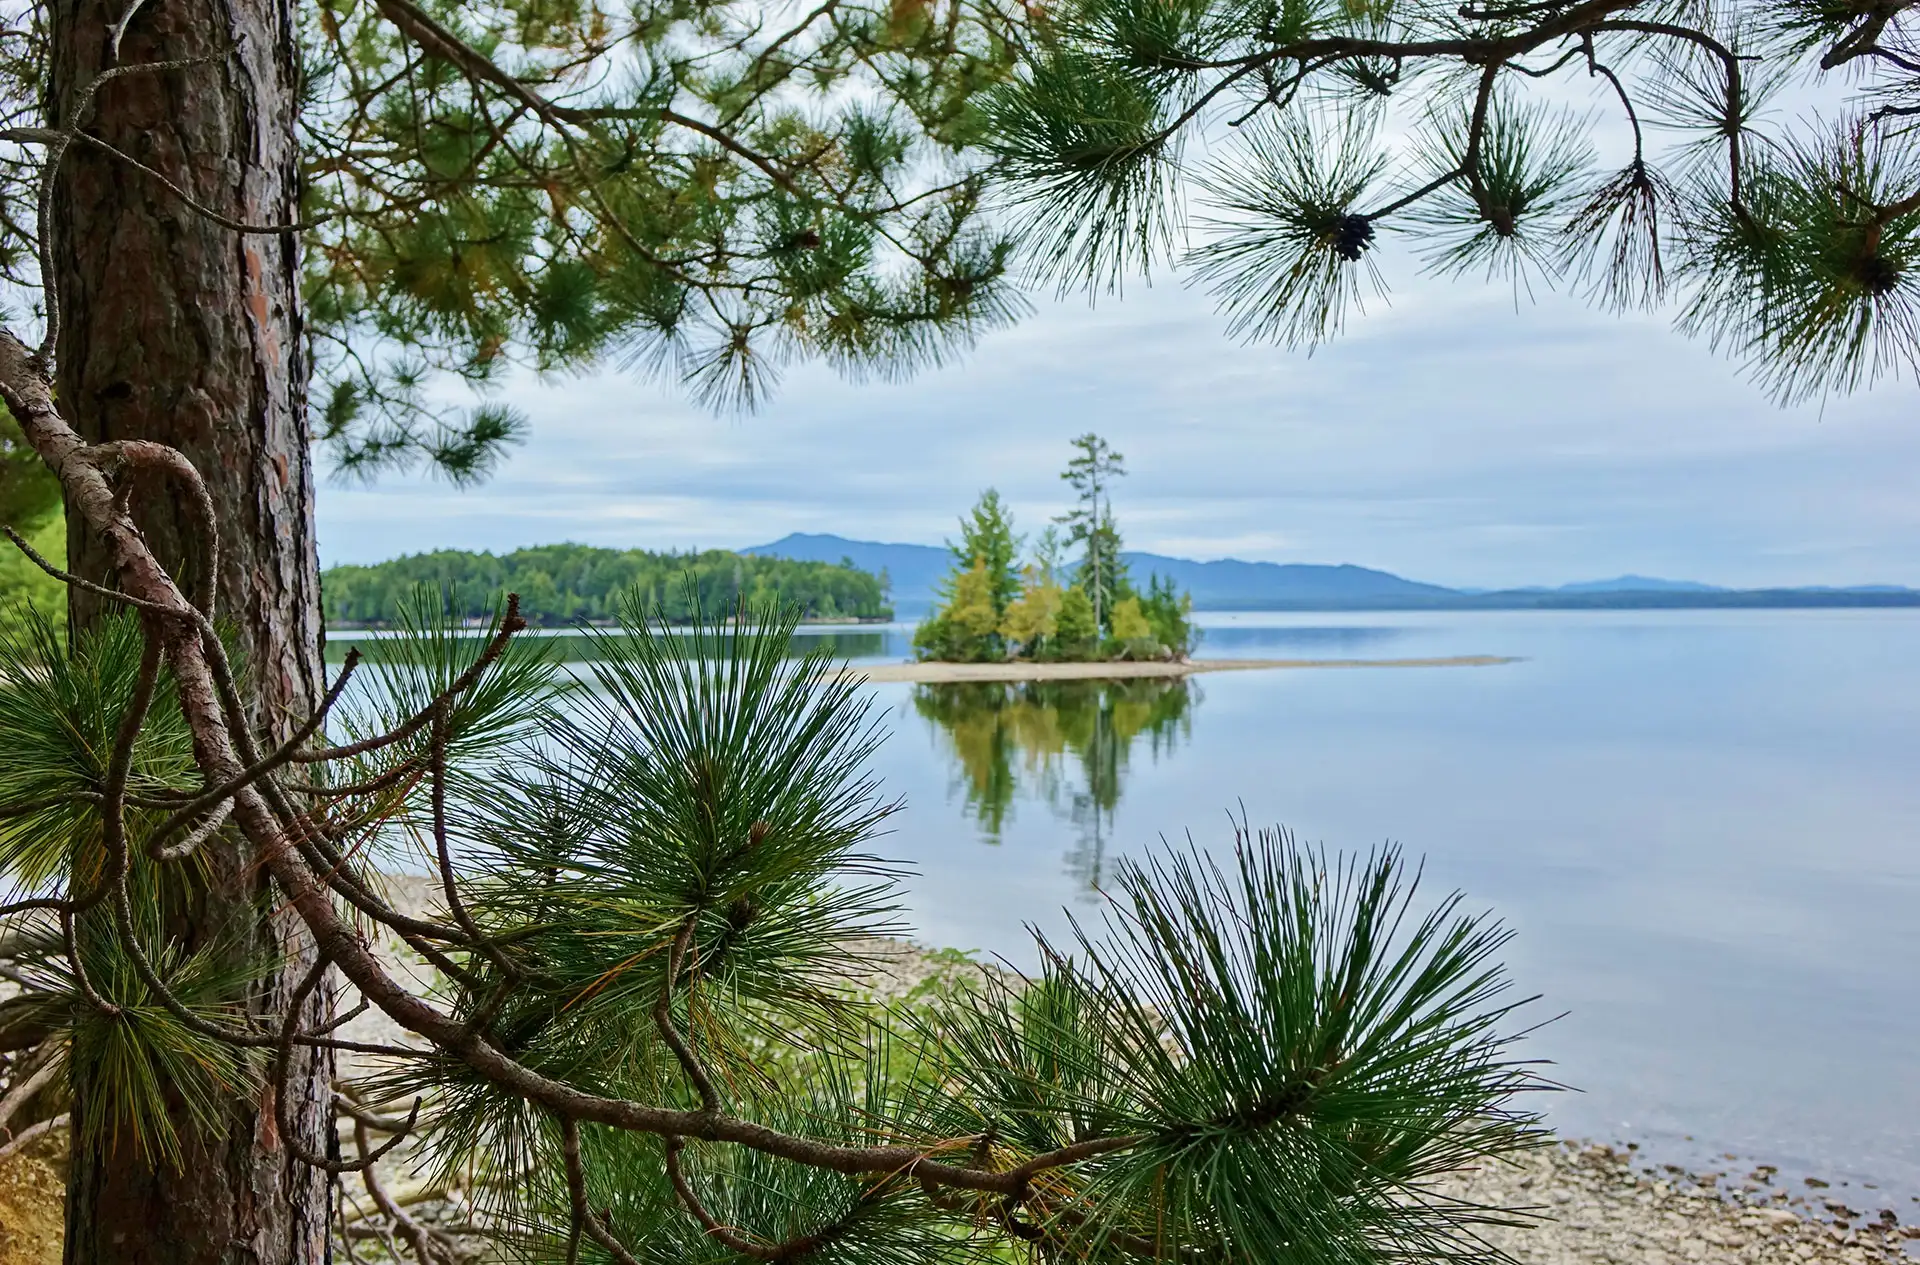 Moosehead Lake in Maine